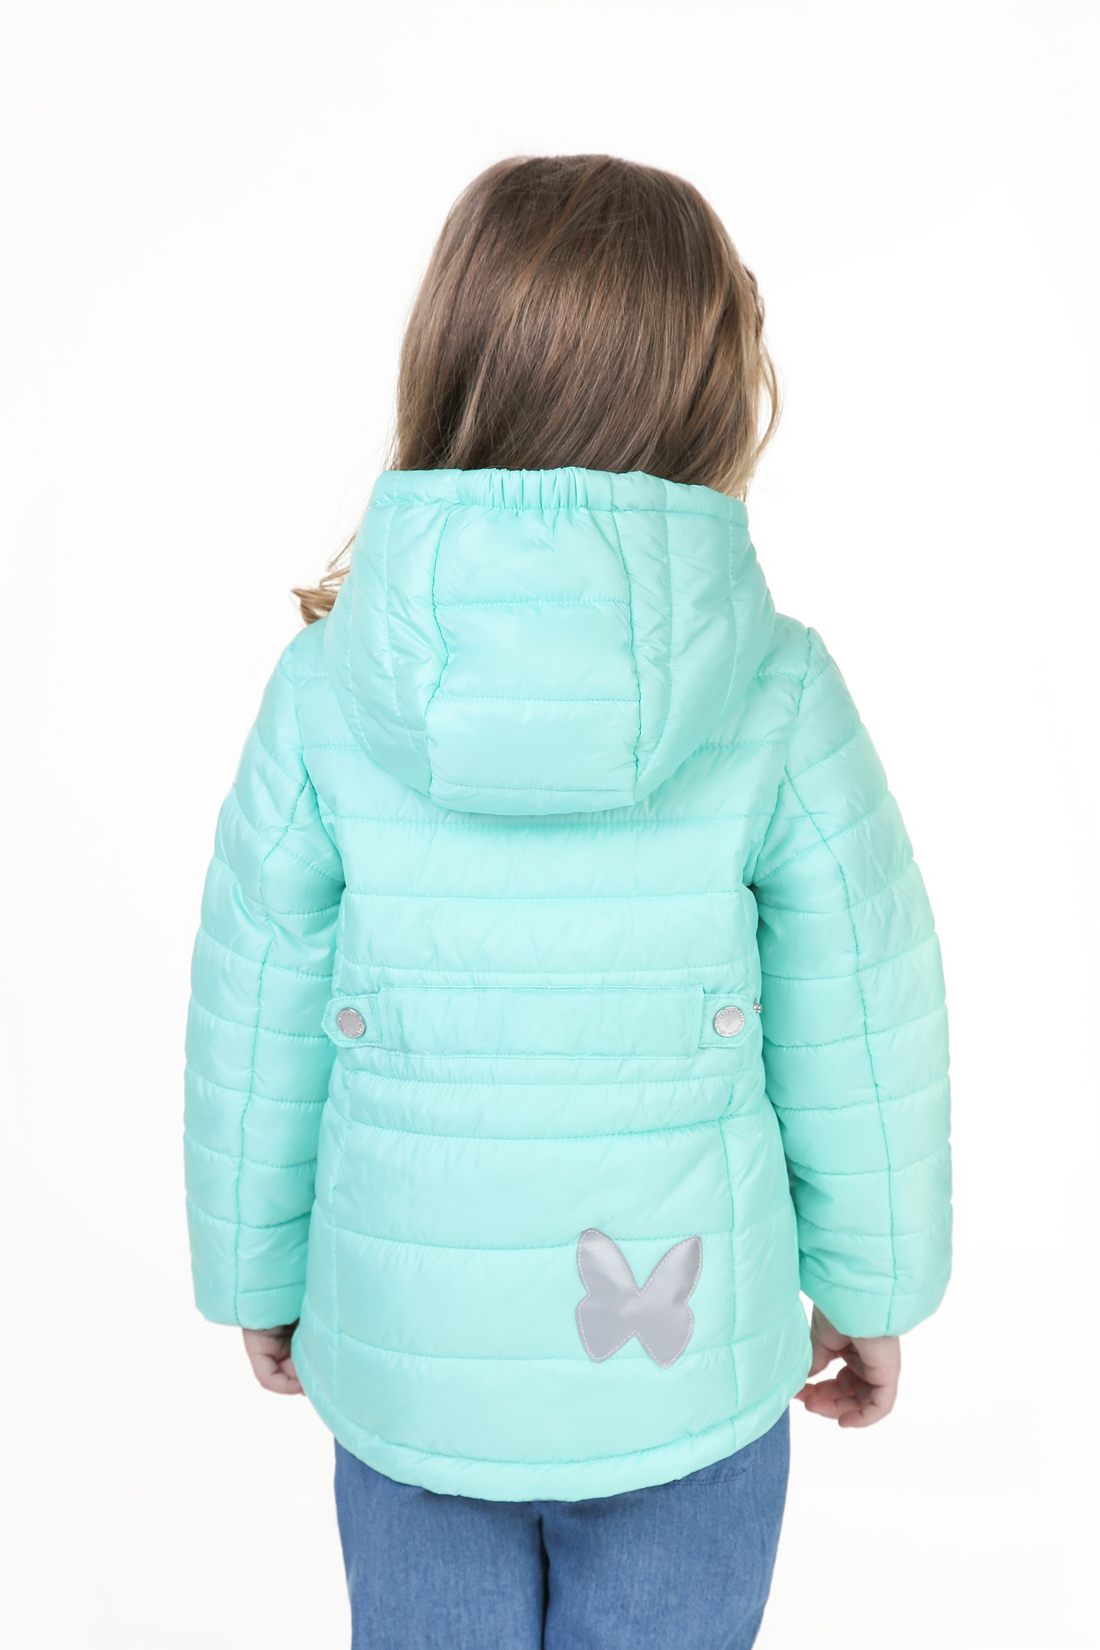 Куртка для девочки (арт. baon BK038001), размер 98-104, цвет зеленый Куртка для девочки (арт. baon BK038001) - фото 2